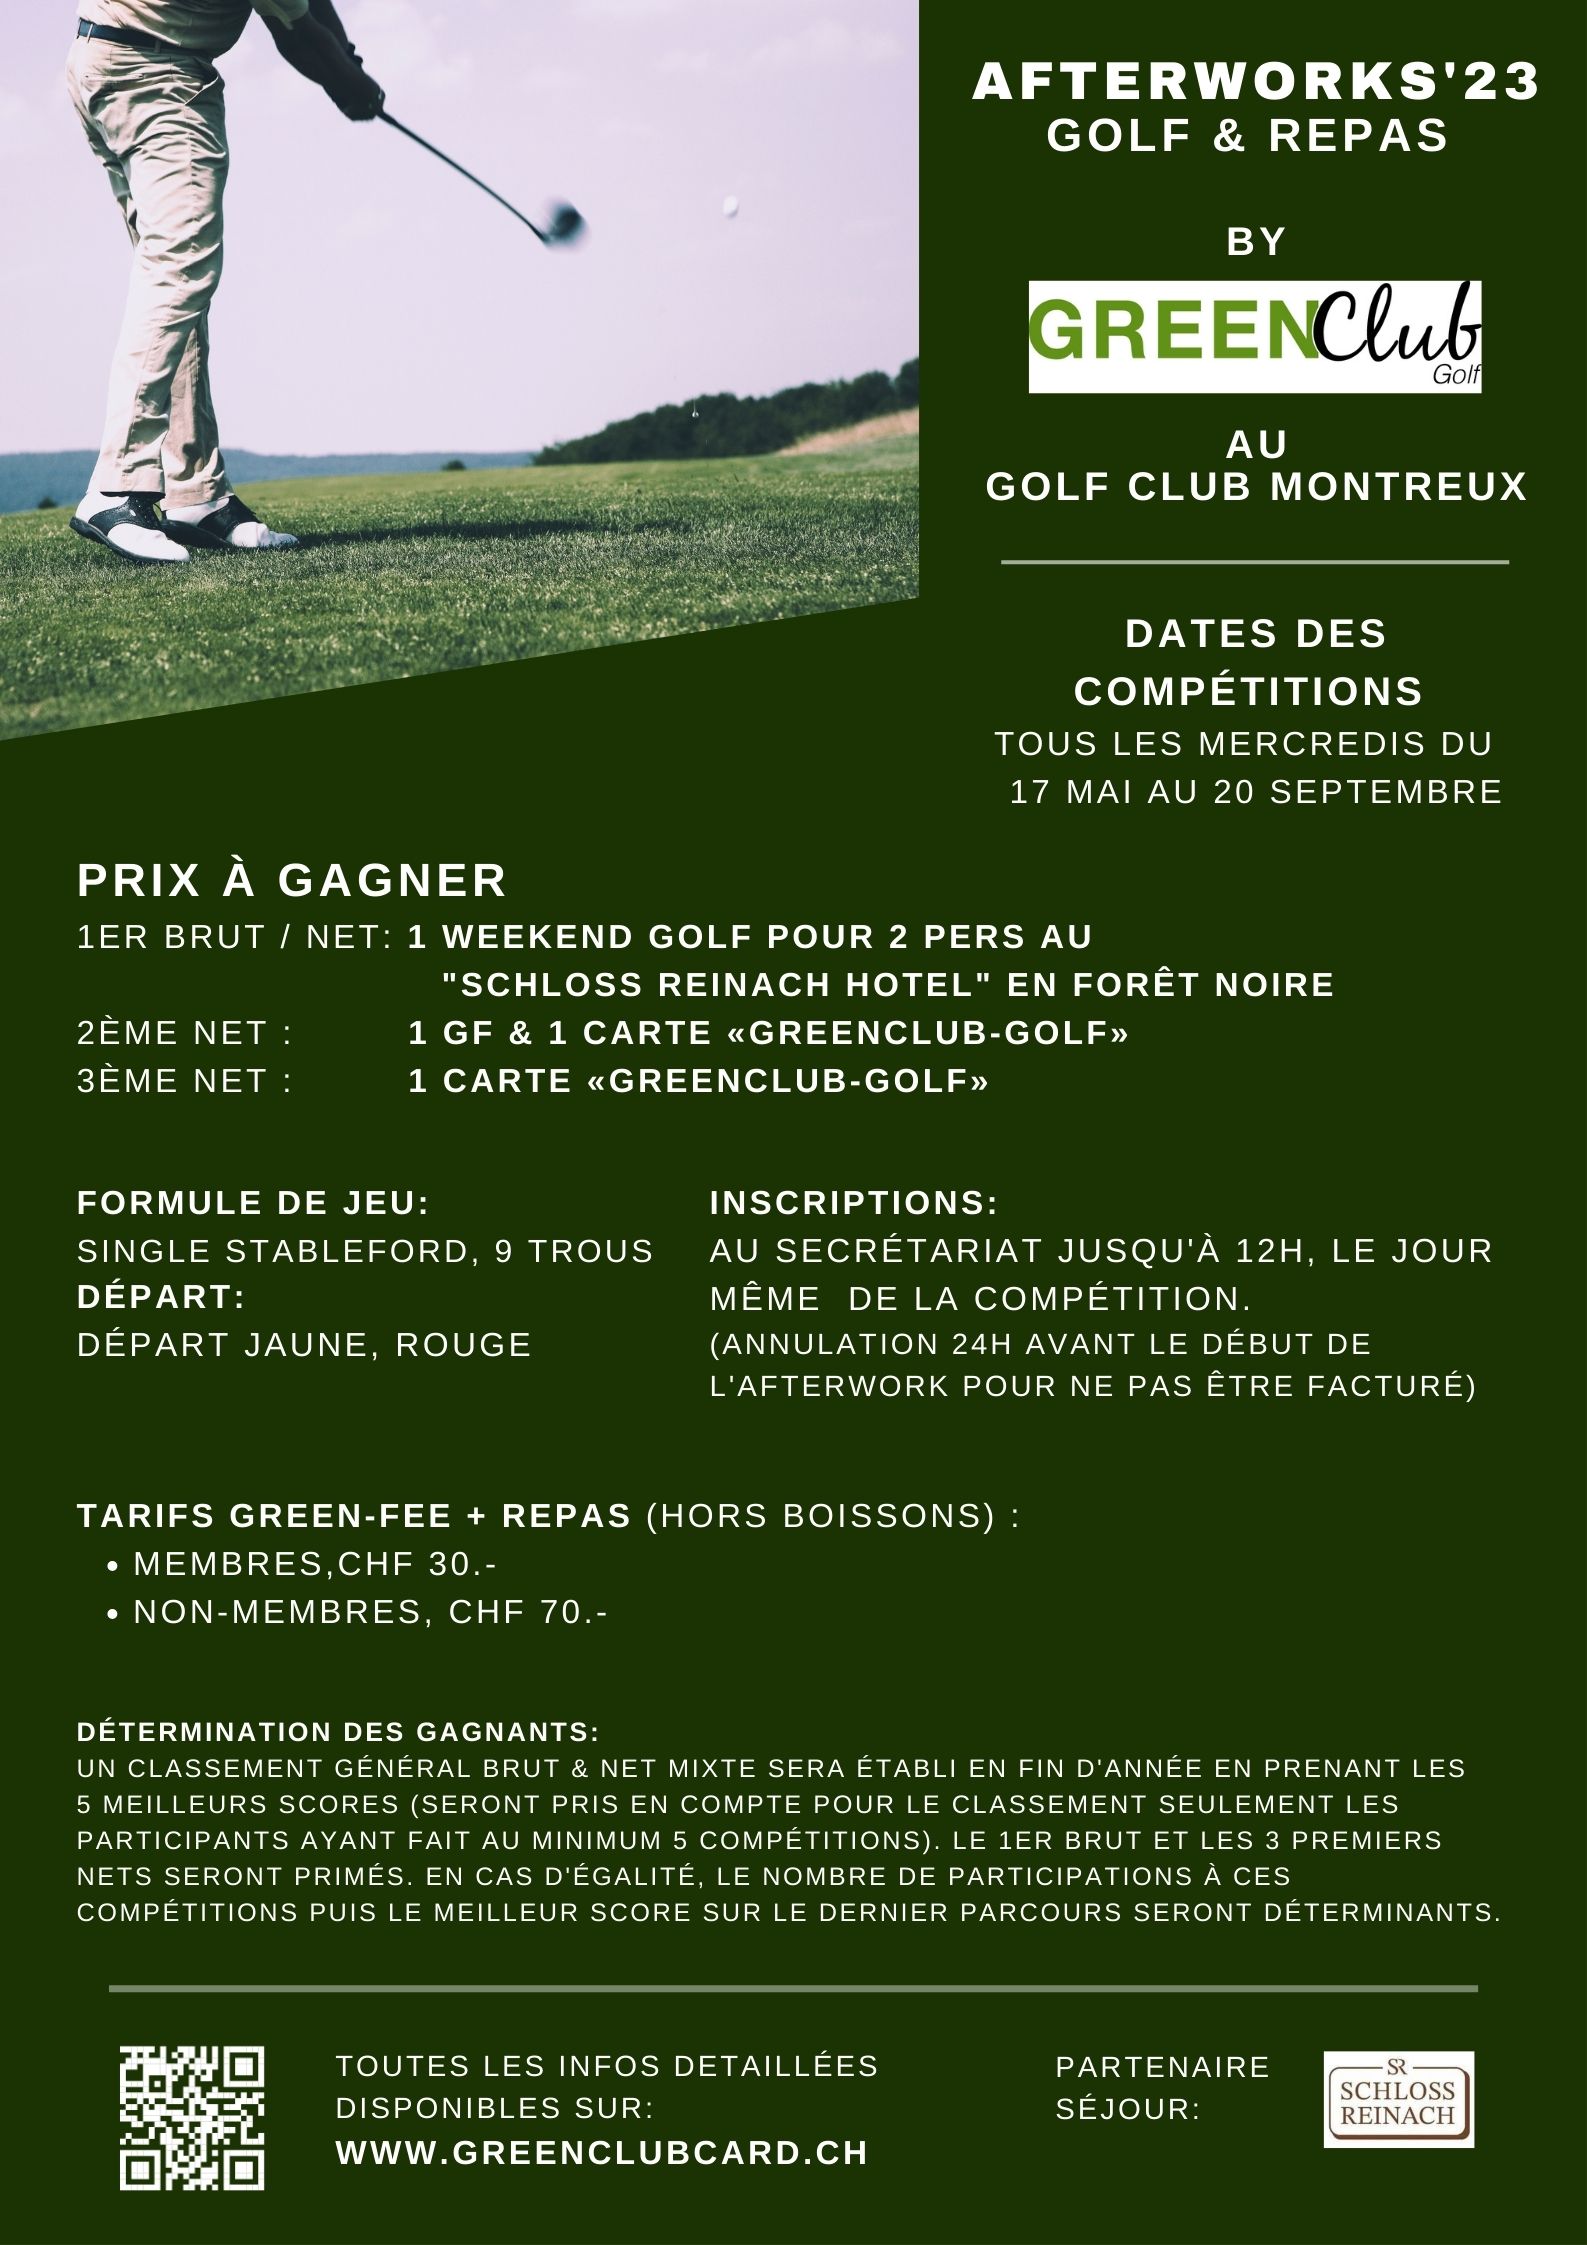 GreenClub-Golf-Suisse_Afterworks 2023_GC Montreux-2